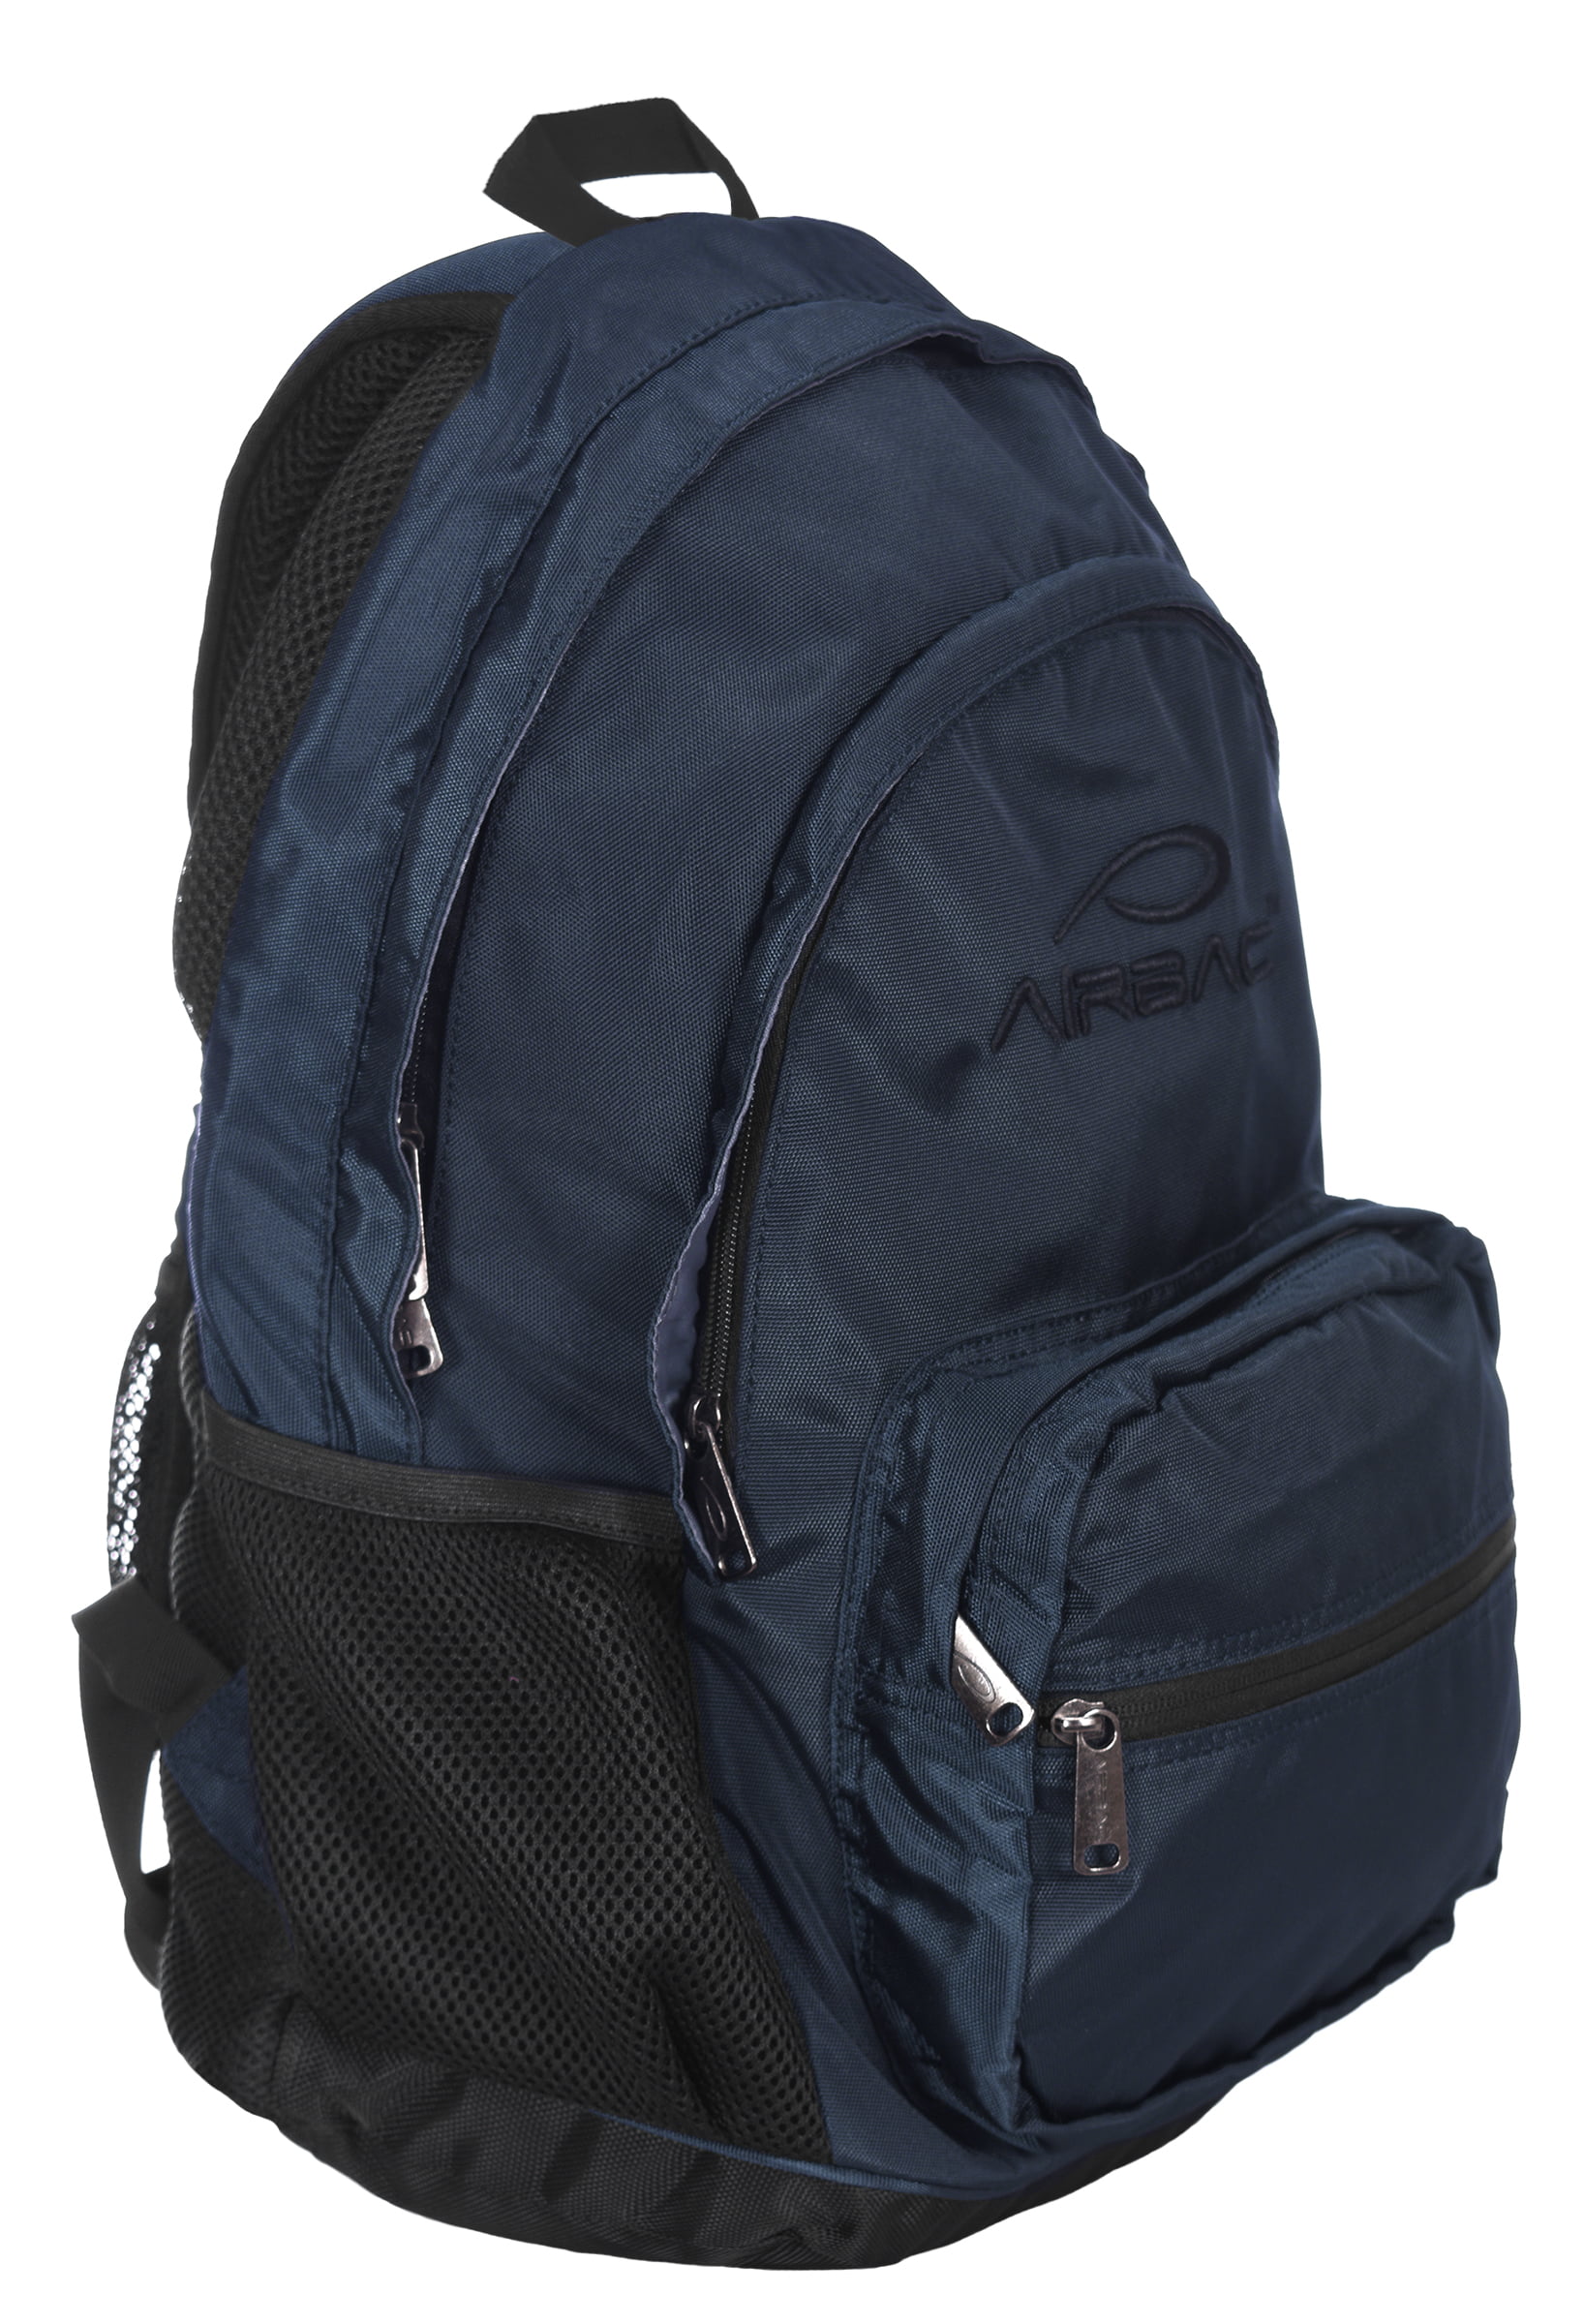 Blue AirBac TechnologiesSkater Backpack